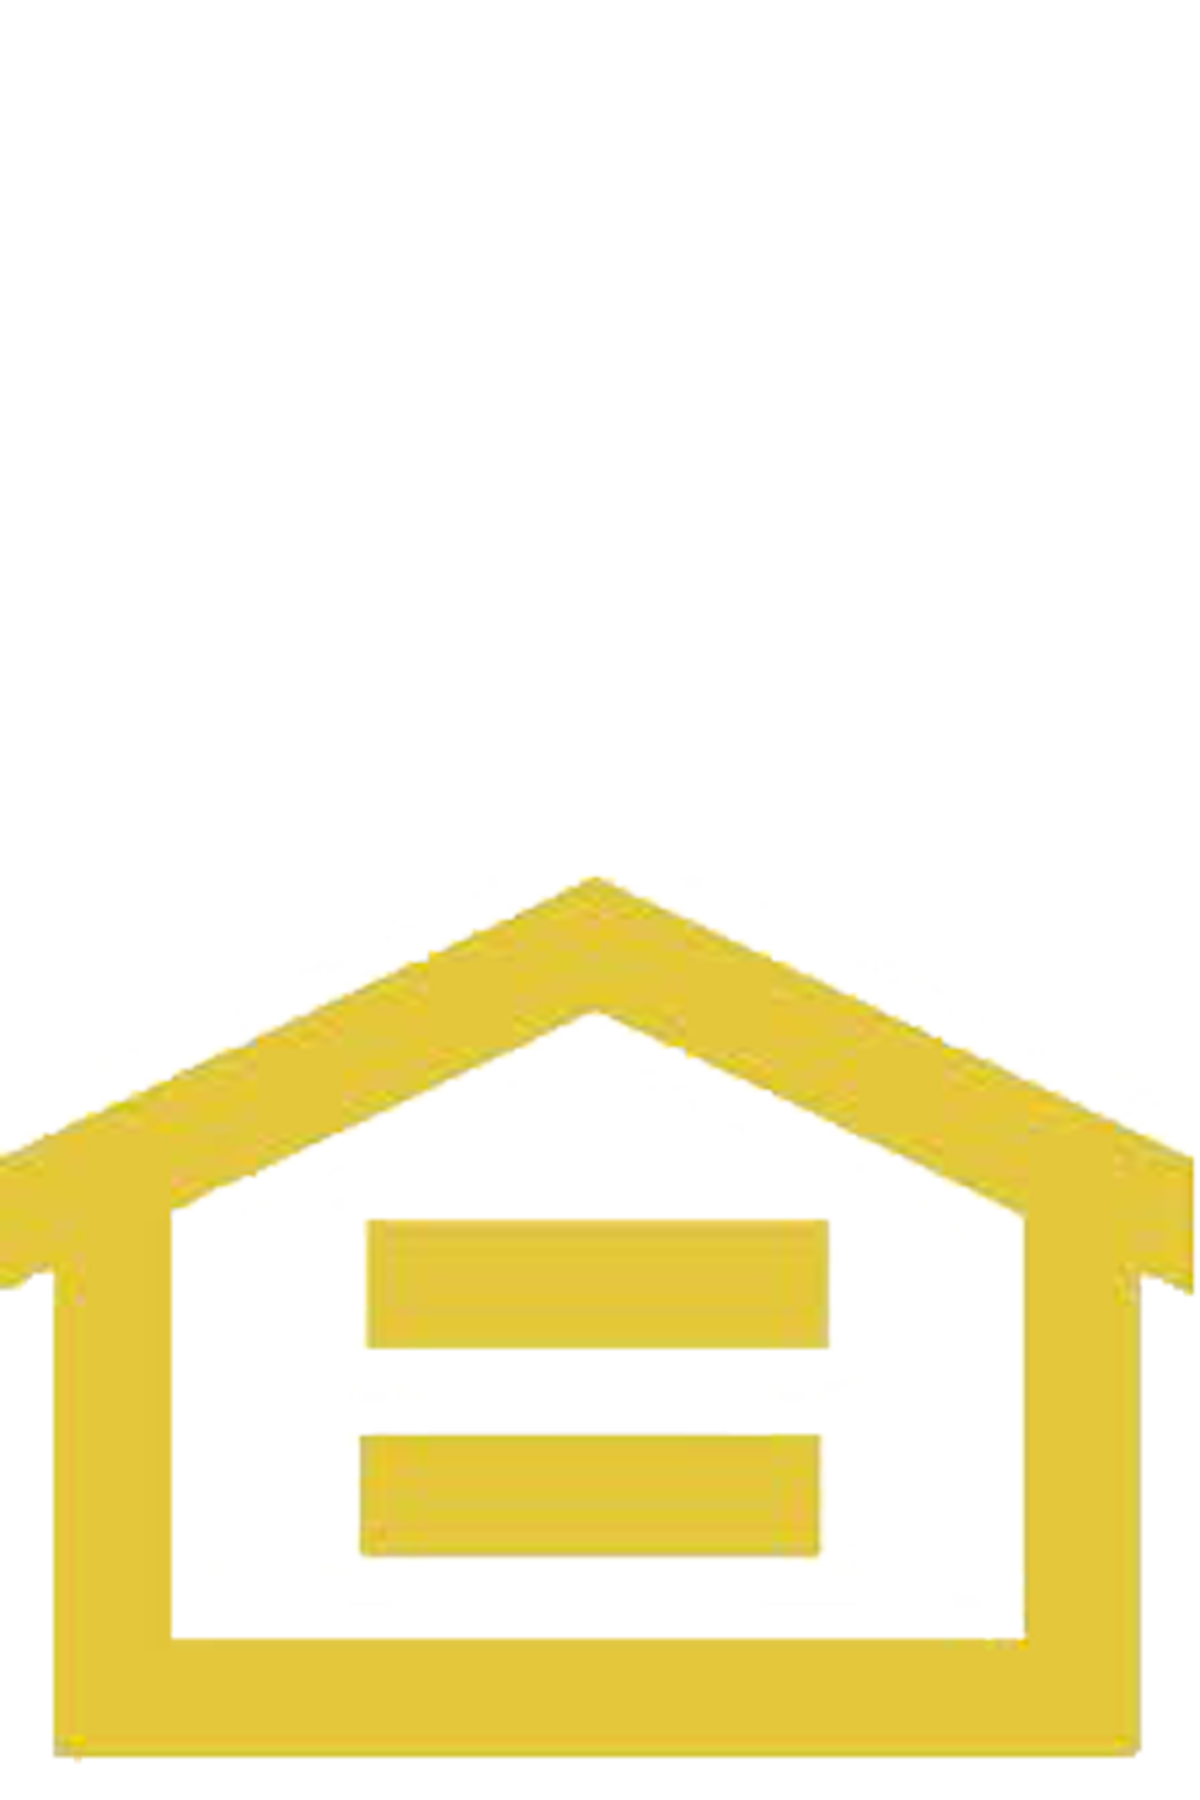 equal housing opportunity logo transparent background